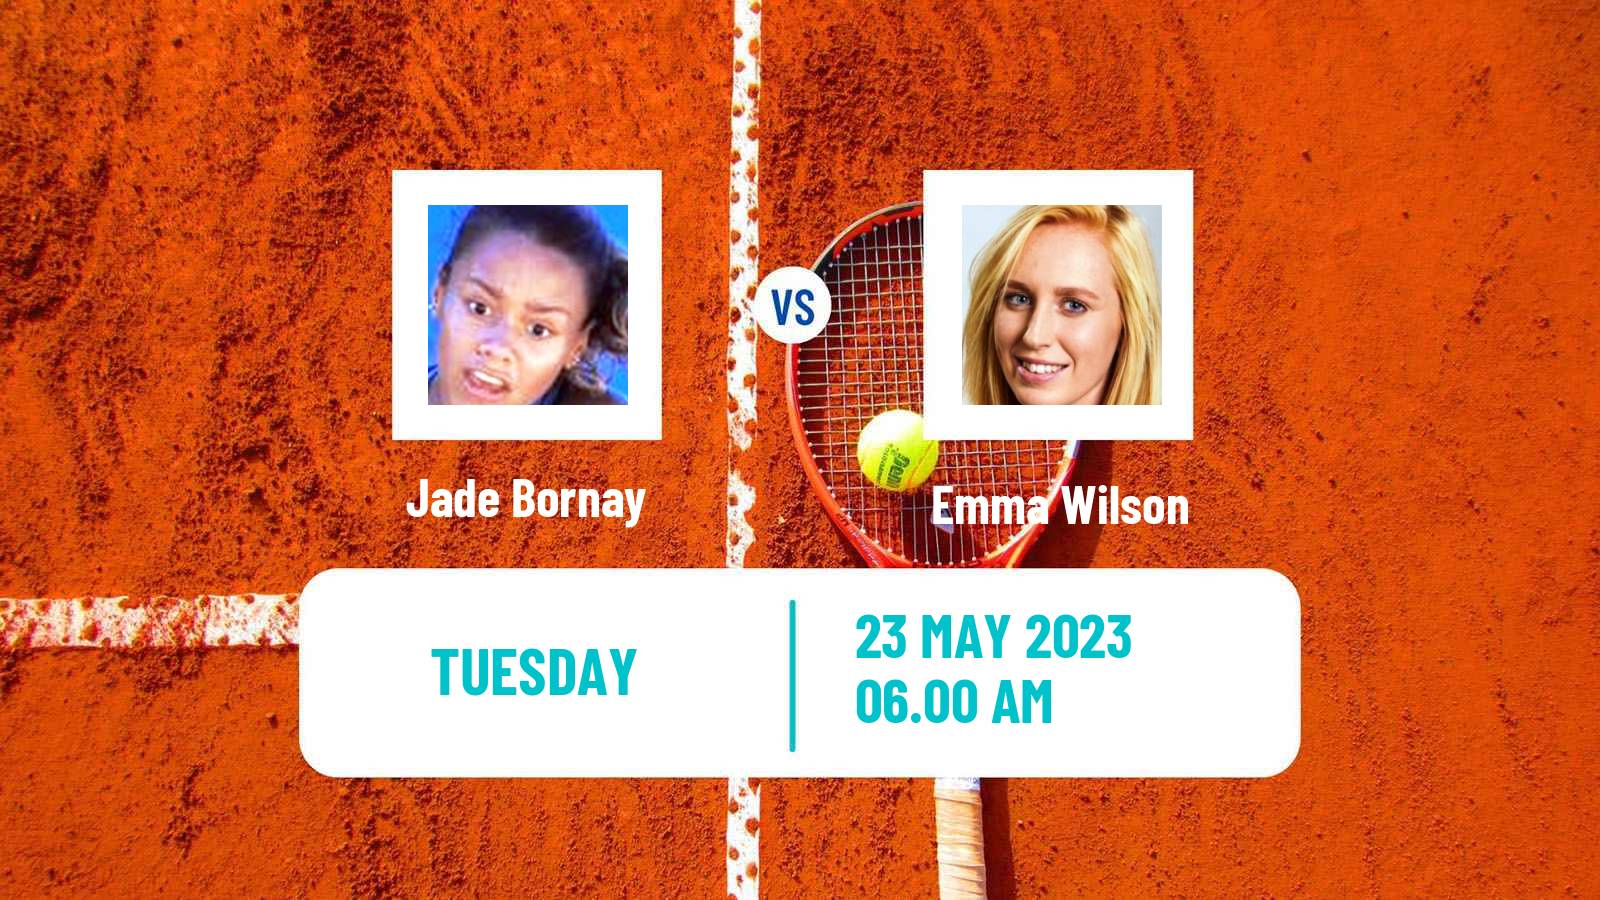 Tennis ITF W15 Malaga Women Jade Bornay - Emma Wilson